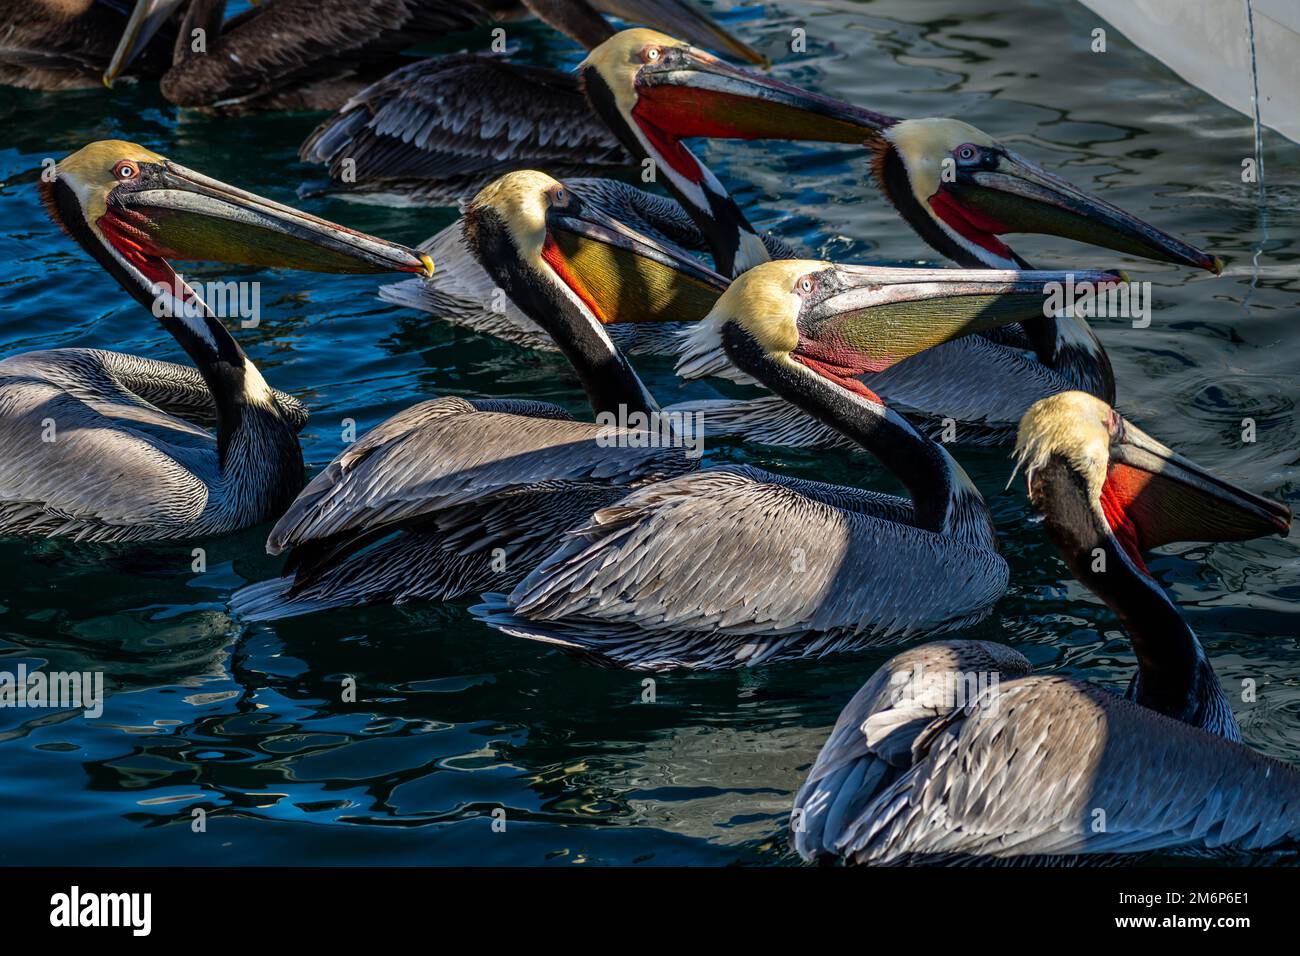 A group of Pelicans in Puerto Penasco, Mexico Stock Photo